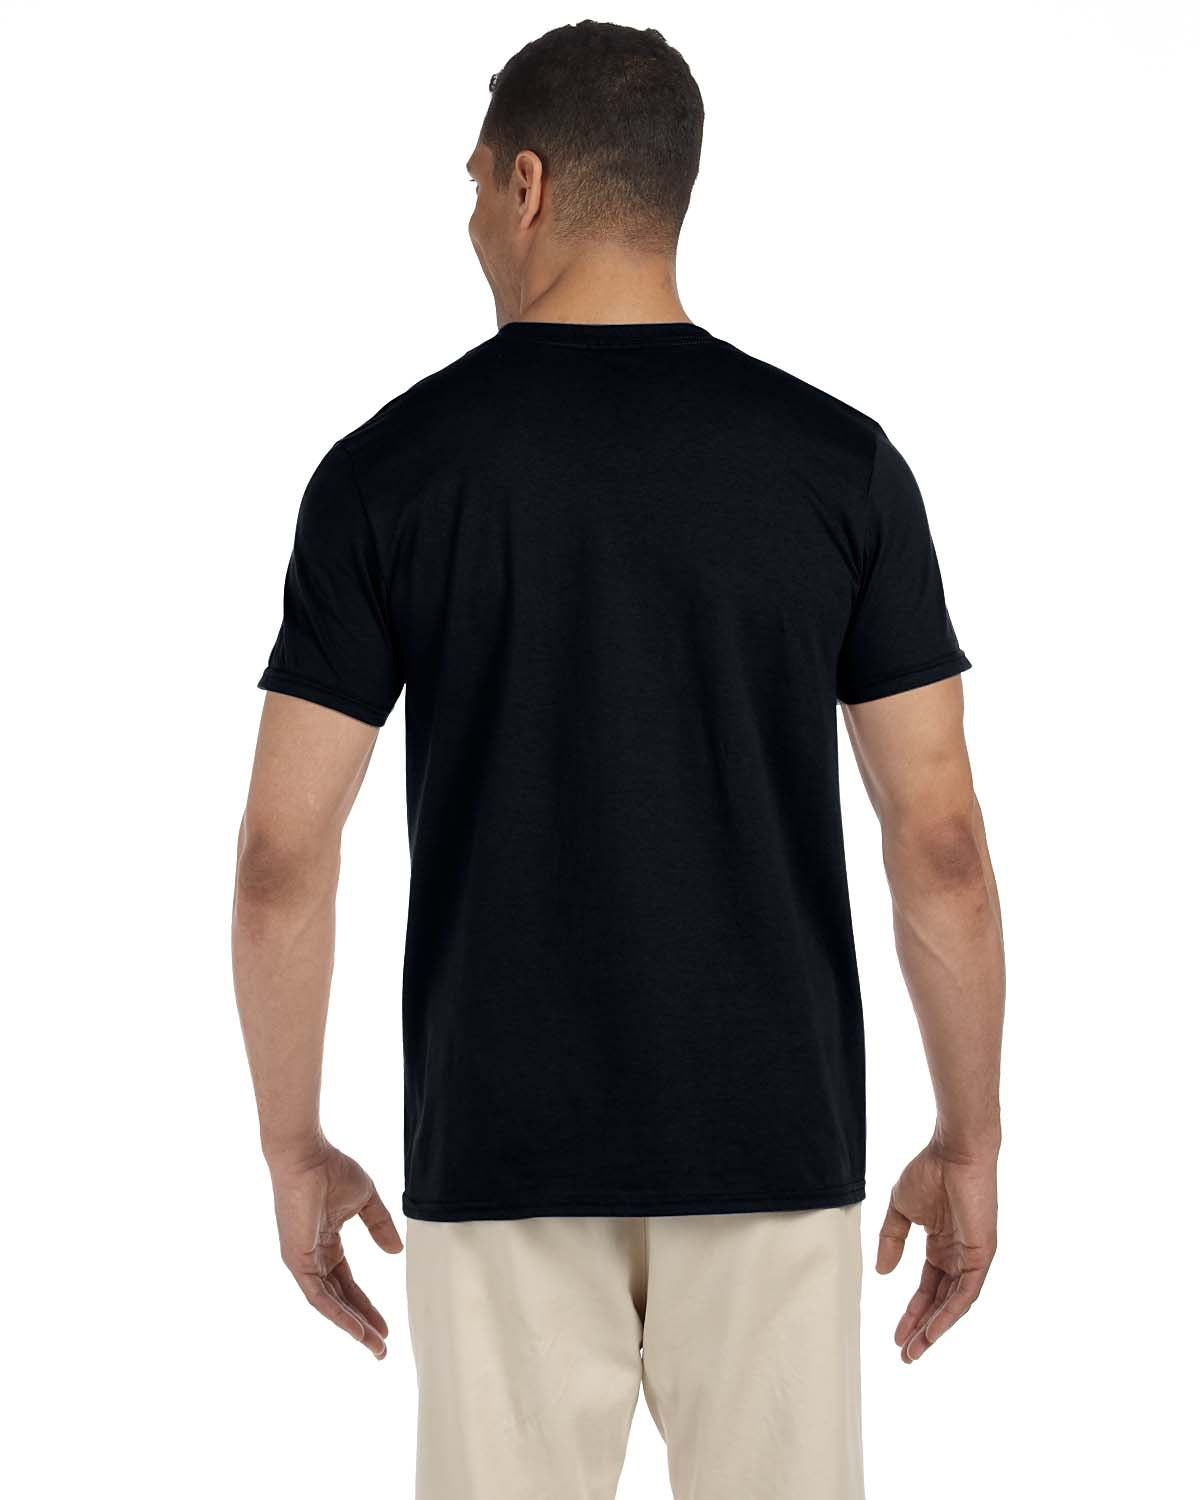 Gildan Softstyle Cotton Adult T-Shirt